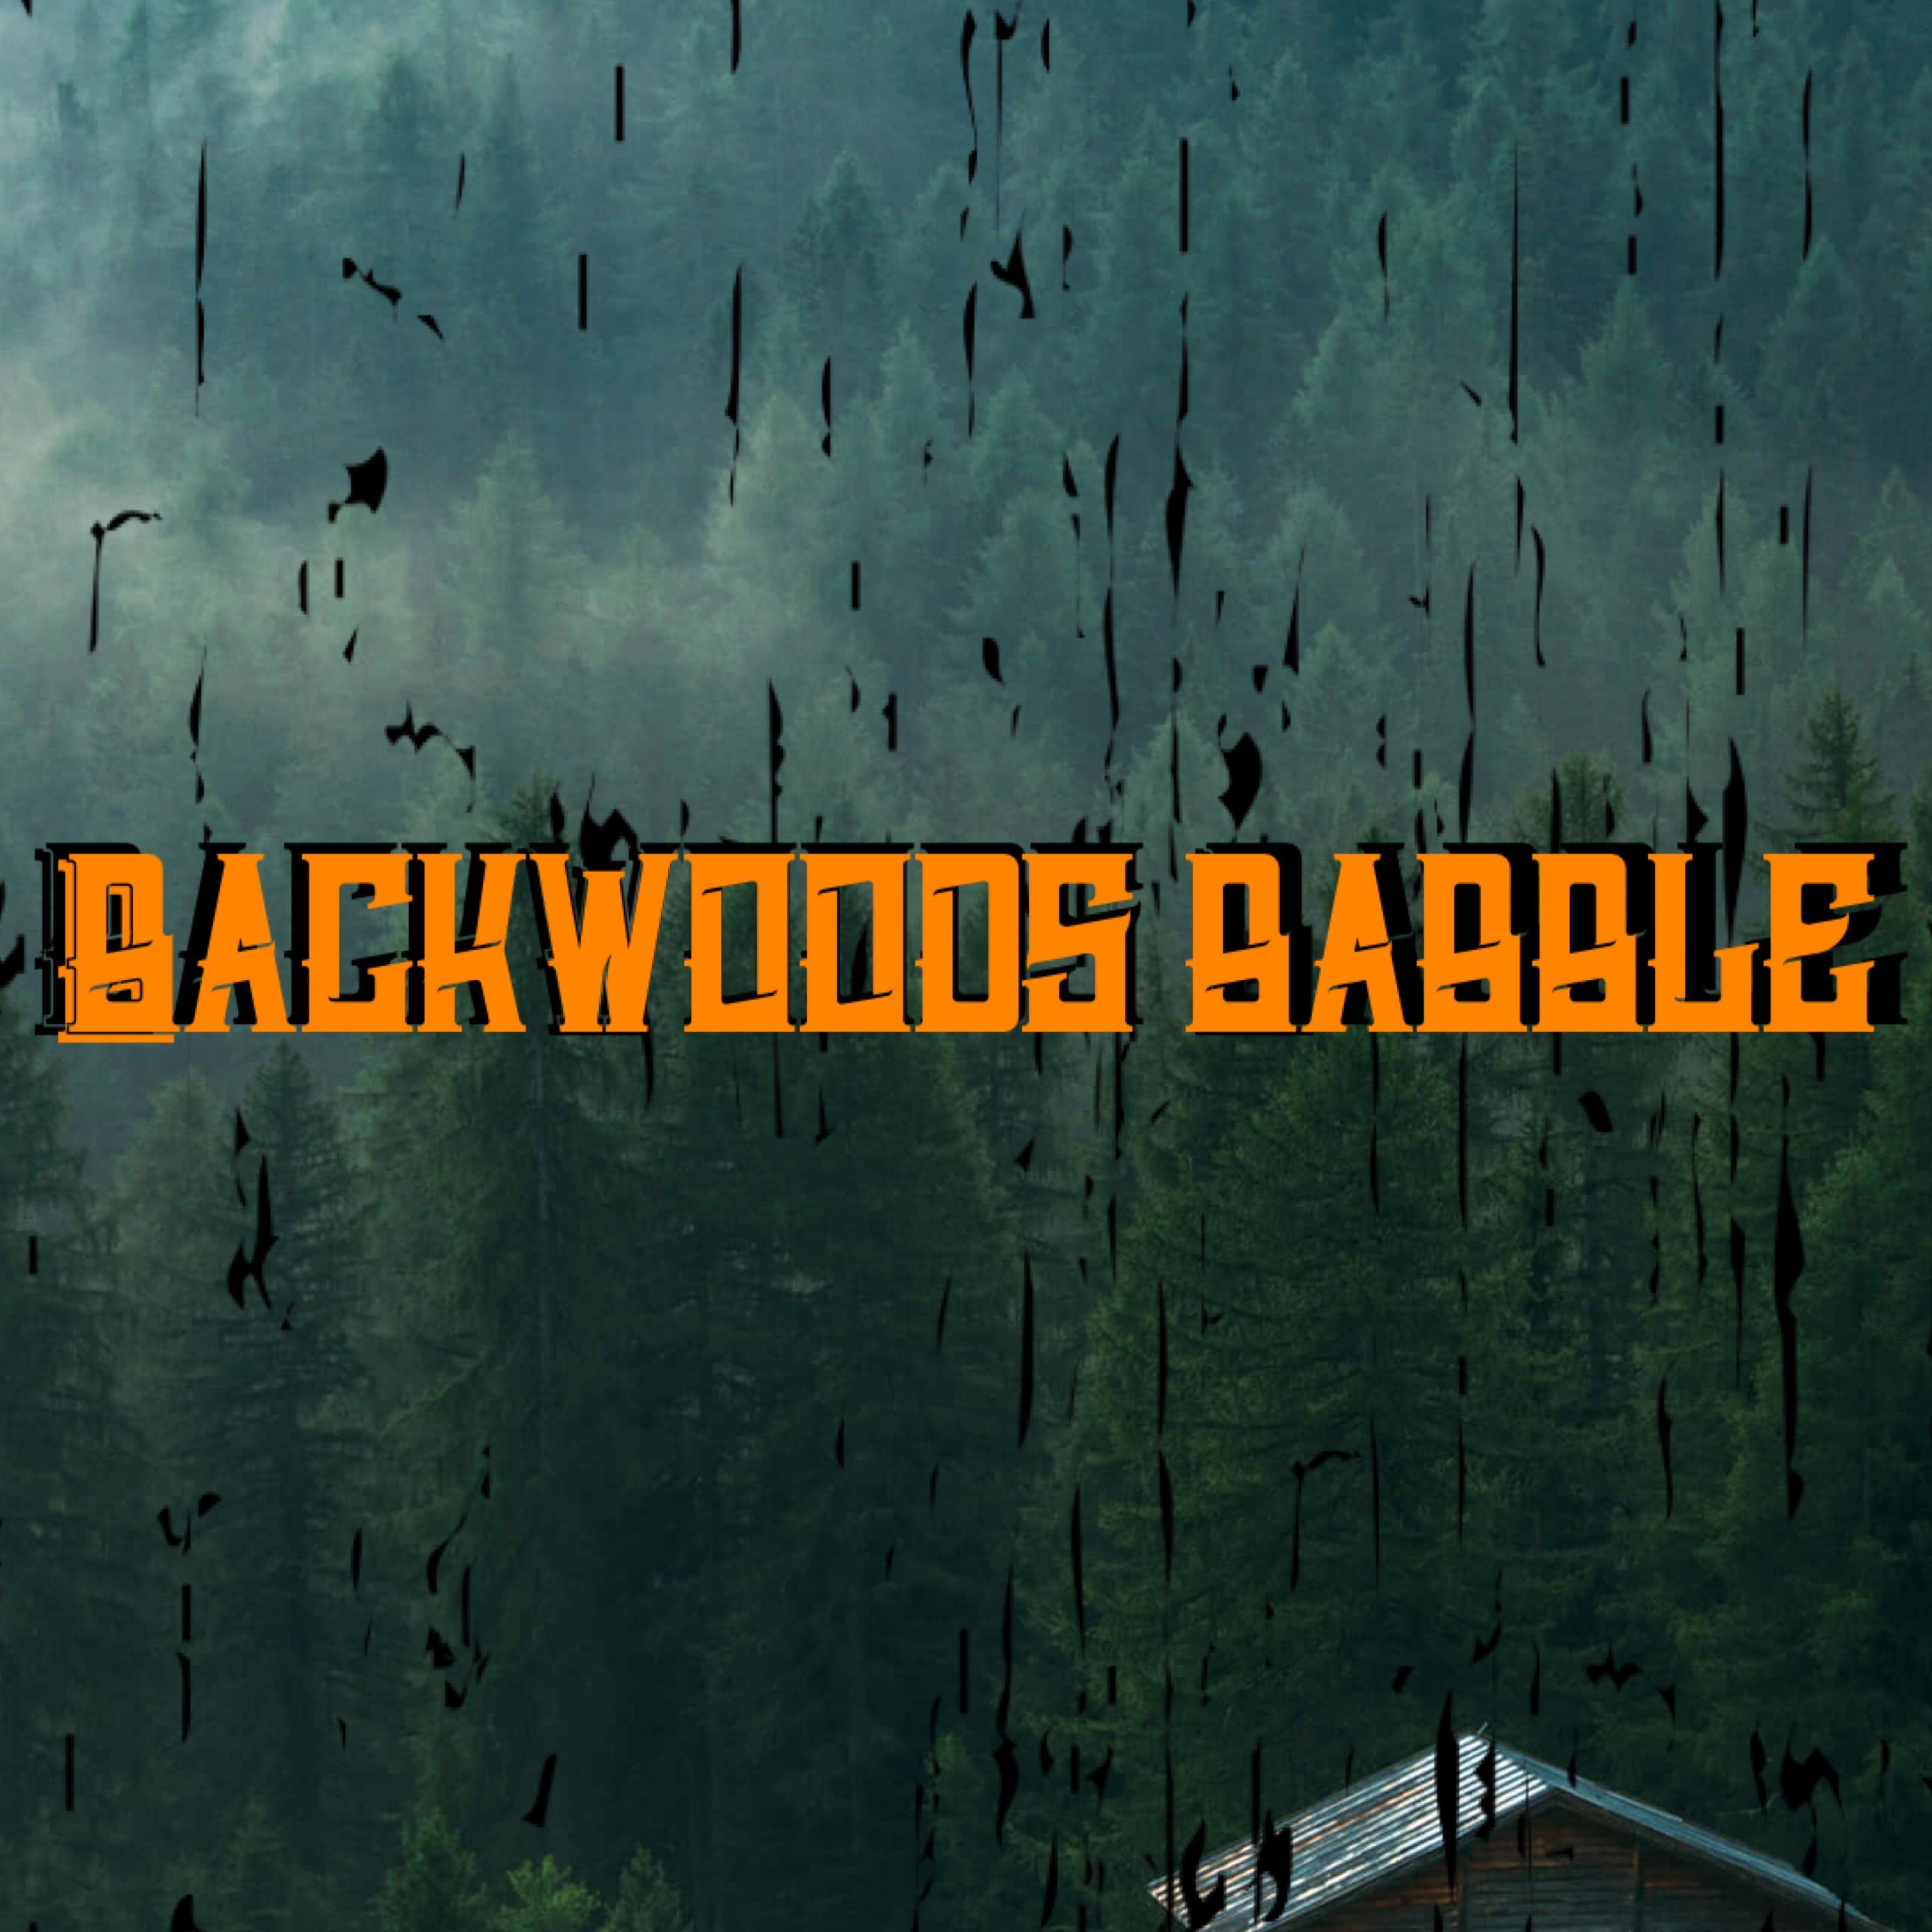 Backwoods Babble